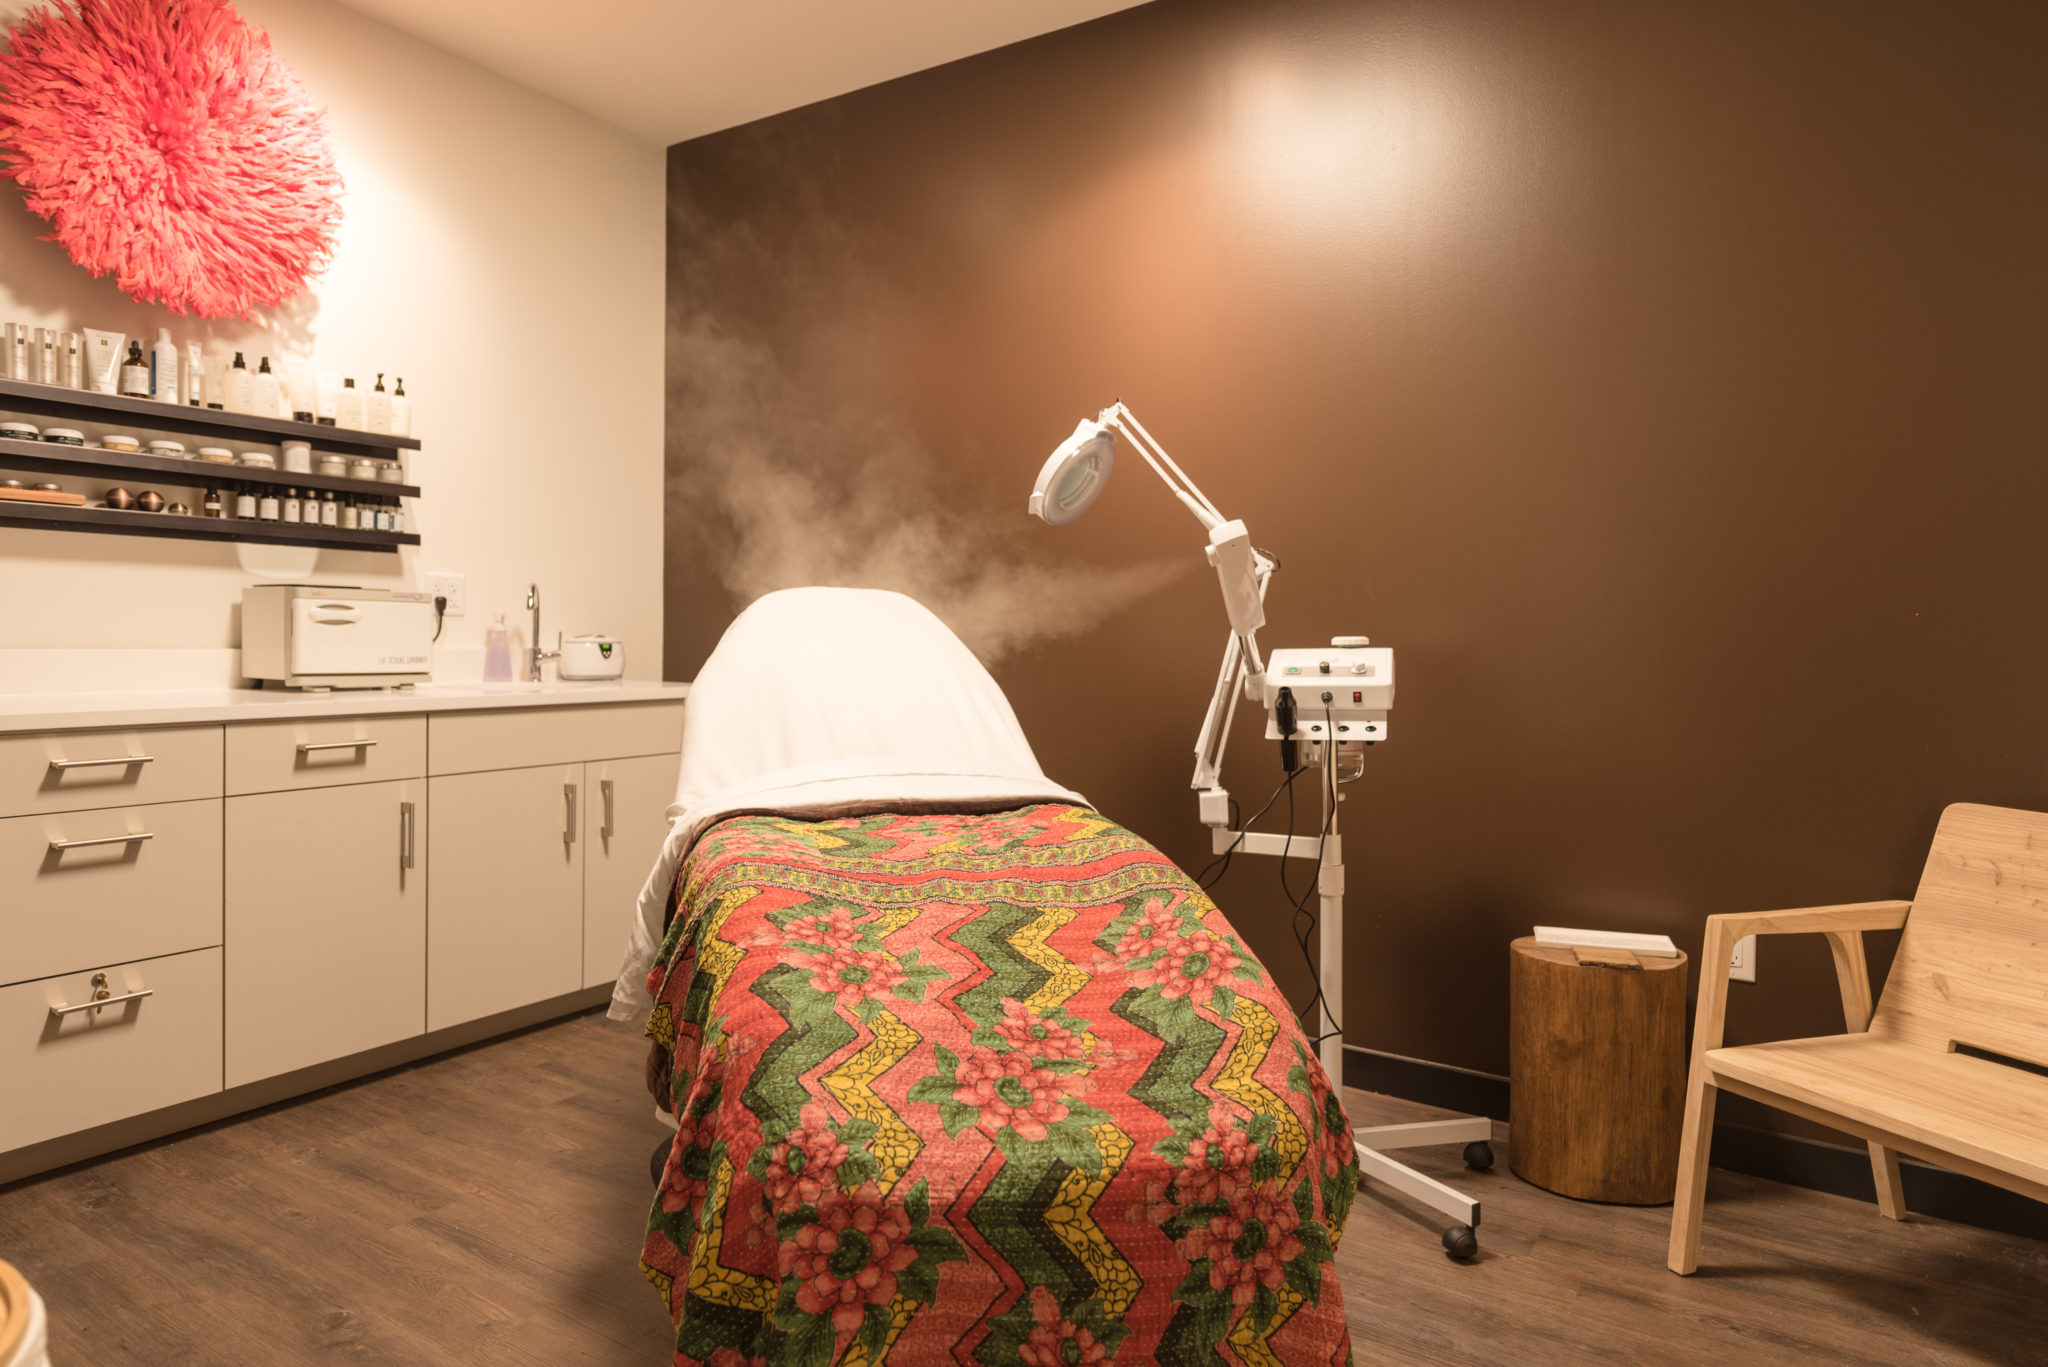 Facial spa treatment room at Viva Day Spa + Med Spa Domain Northside